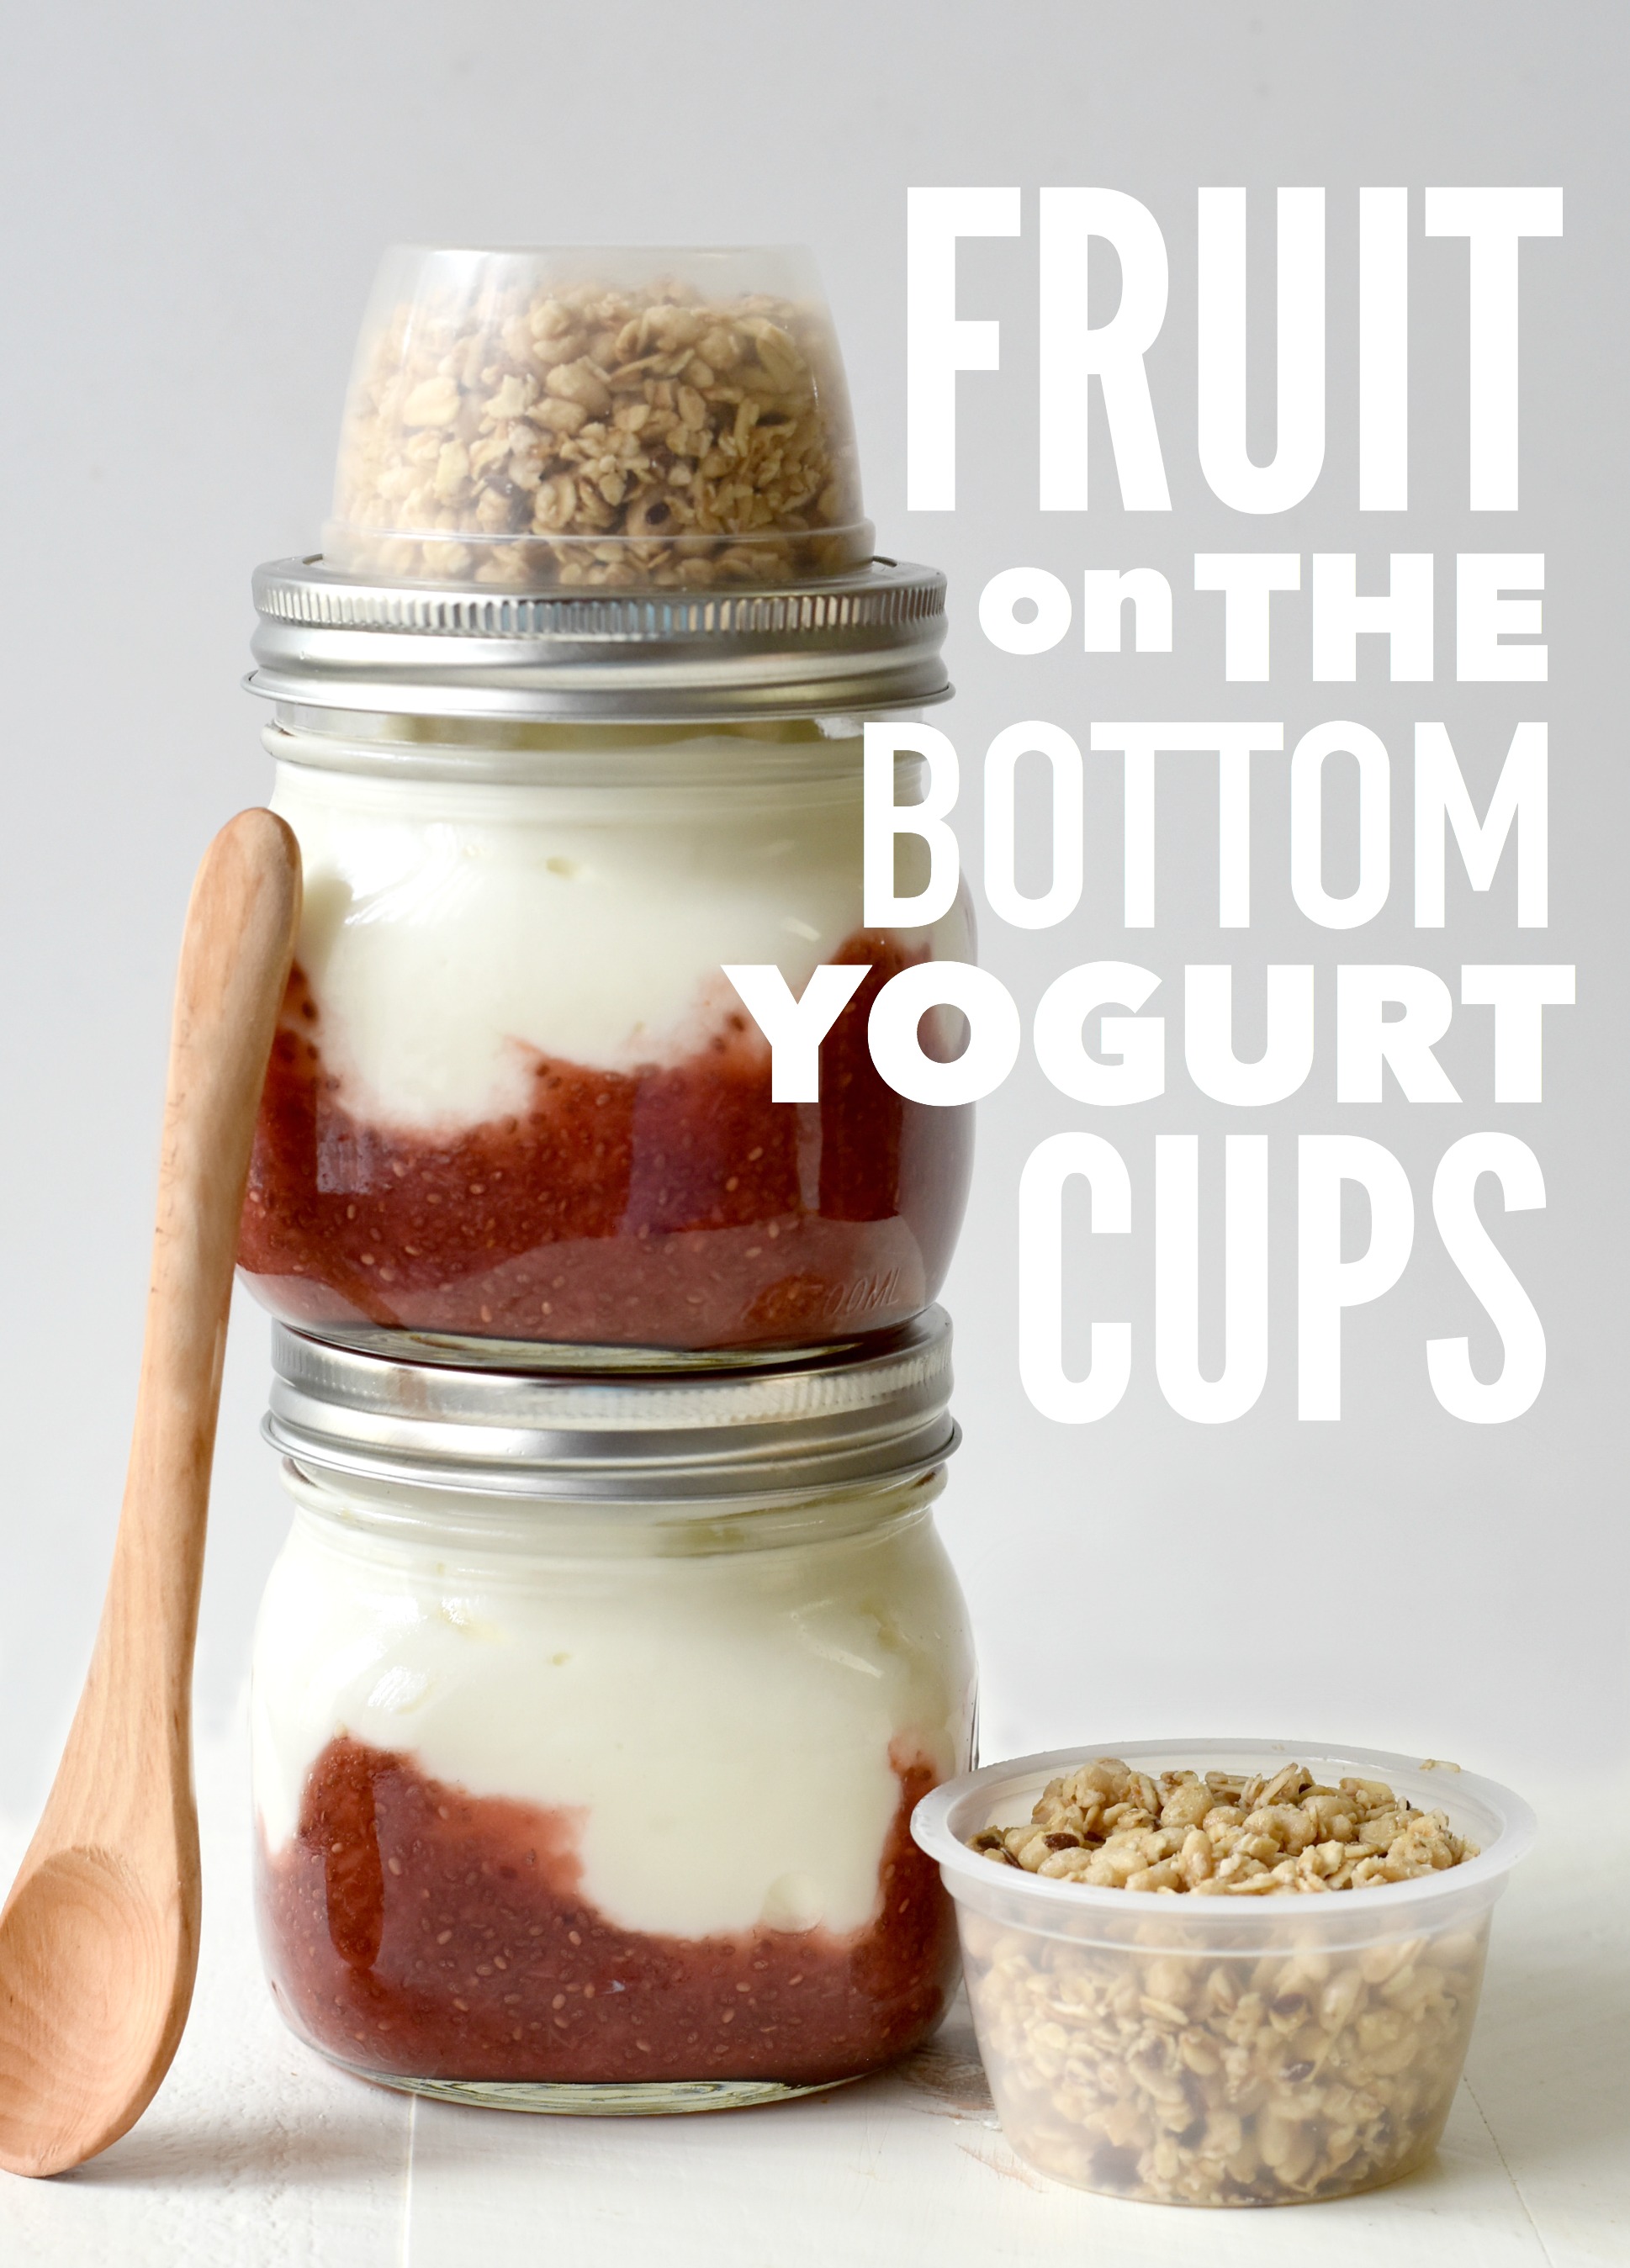 https://www.forkandbeans.com/wp-content/uploads/2017/01/Fruit-on-the-Bottom-Yogurt-Cups-1.jpg